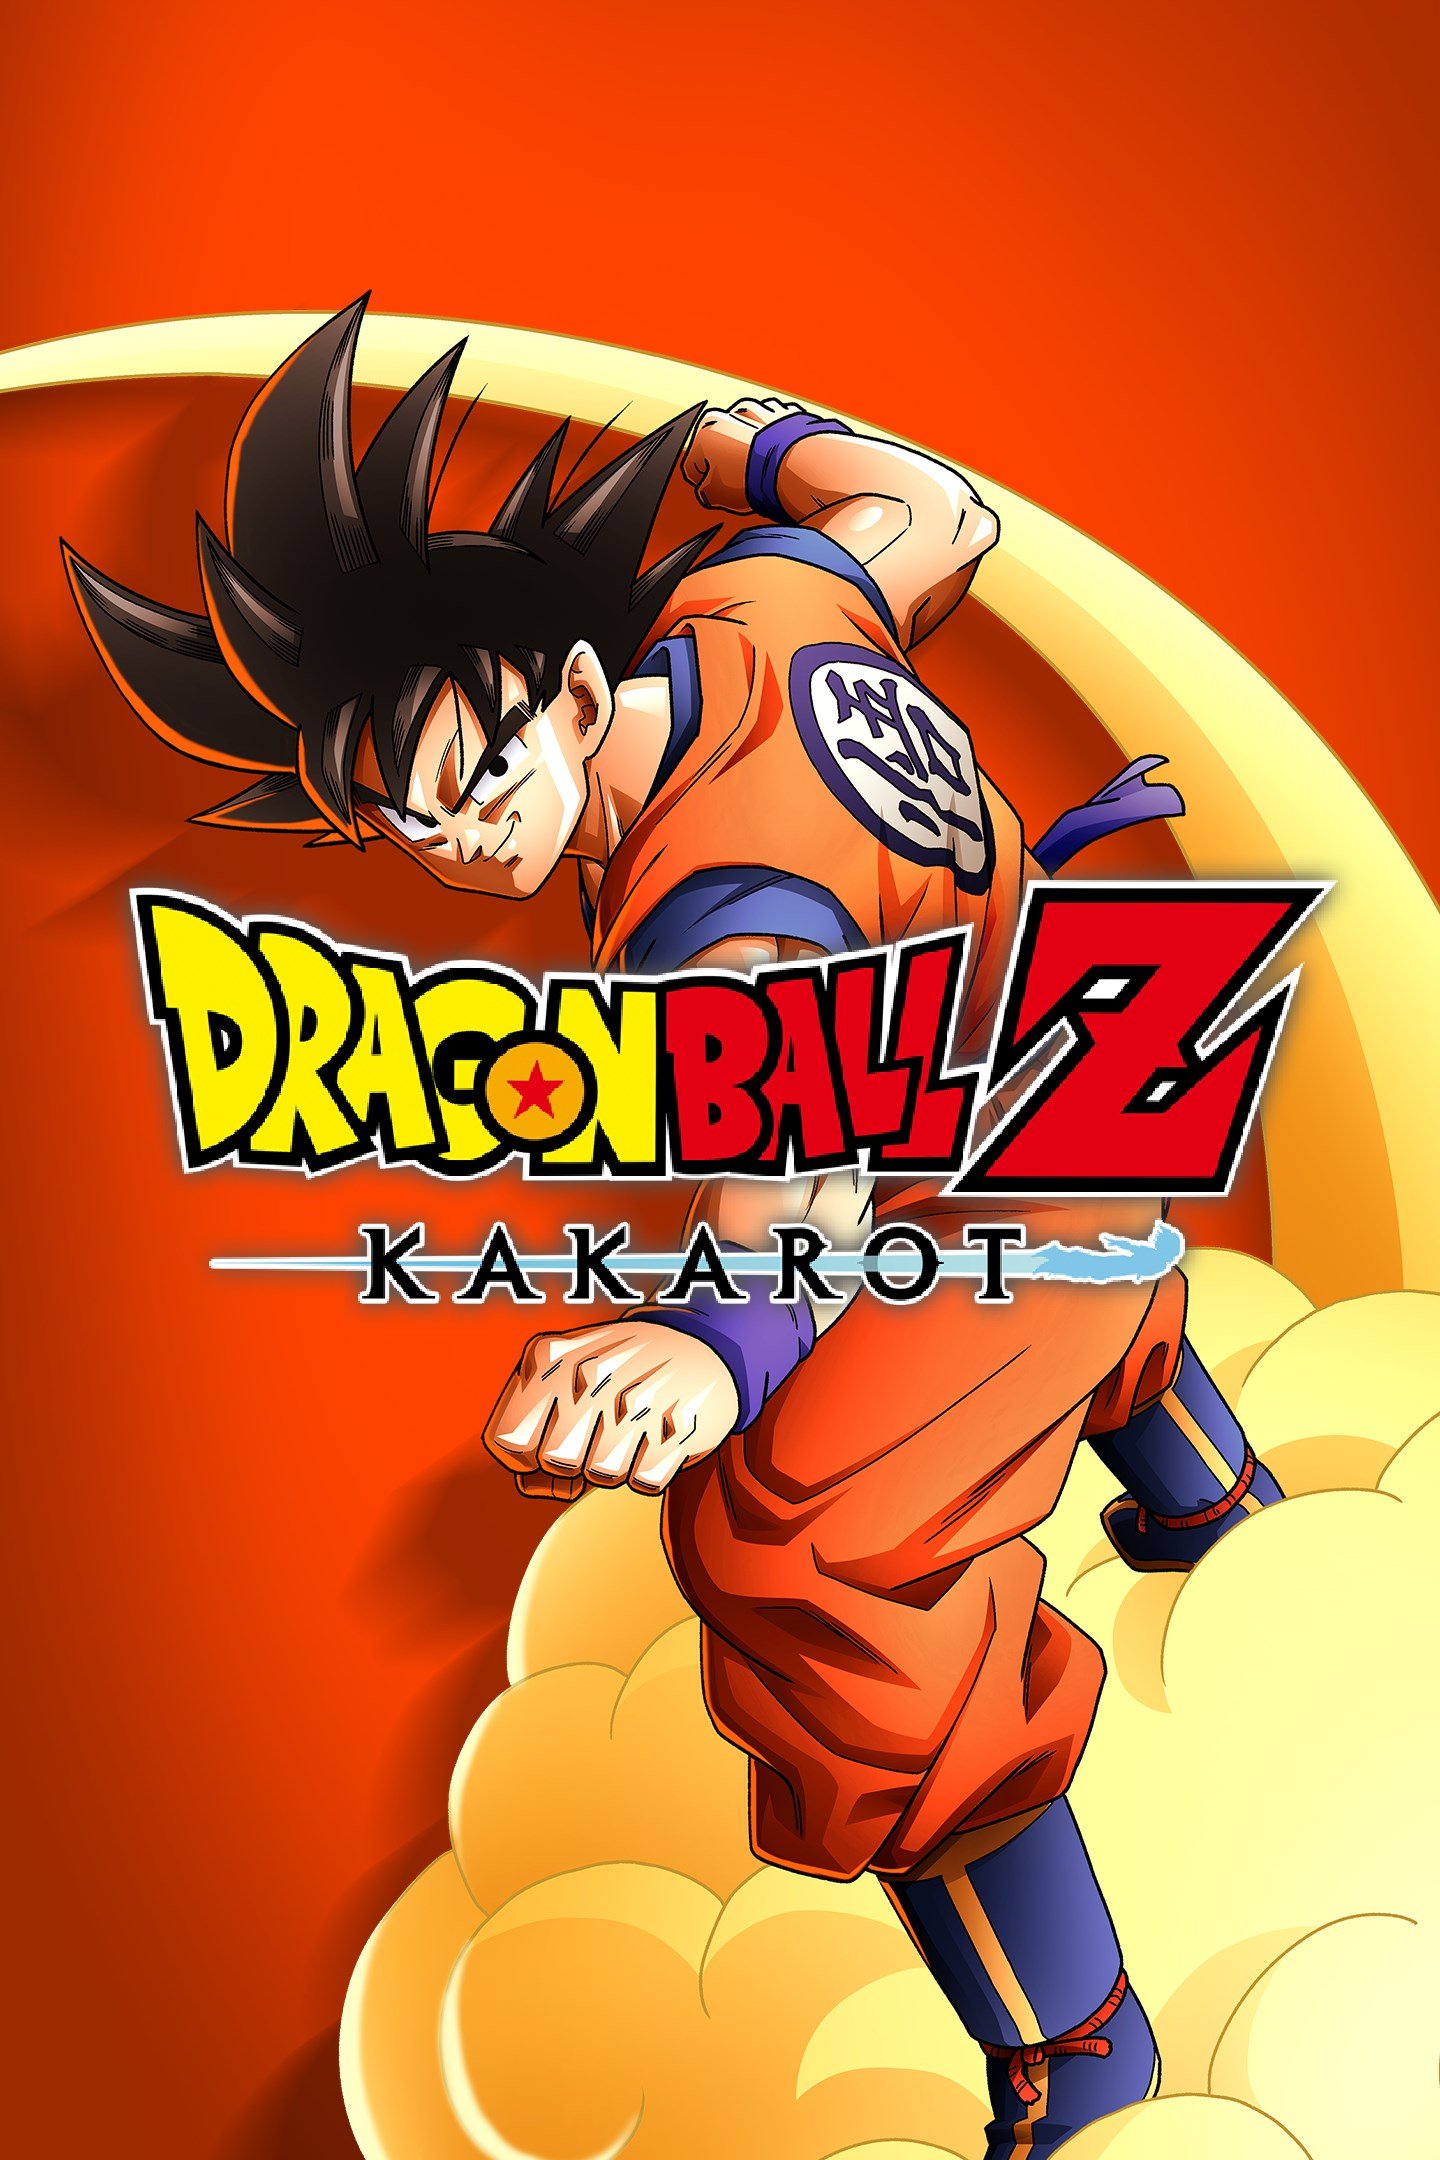 Dragon Ball Z: Kakarot release date